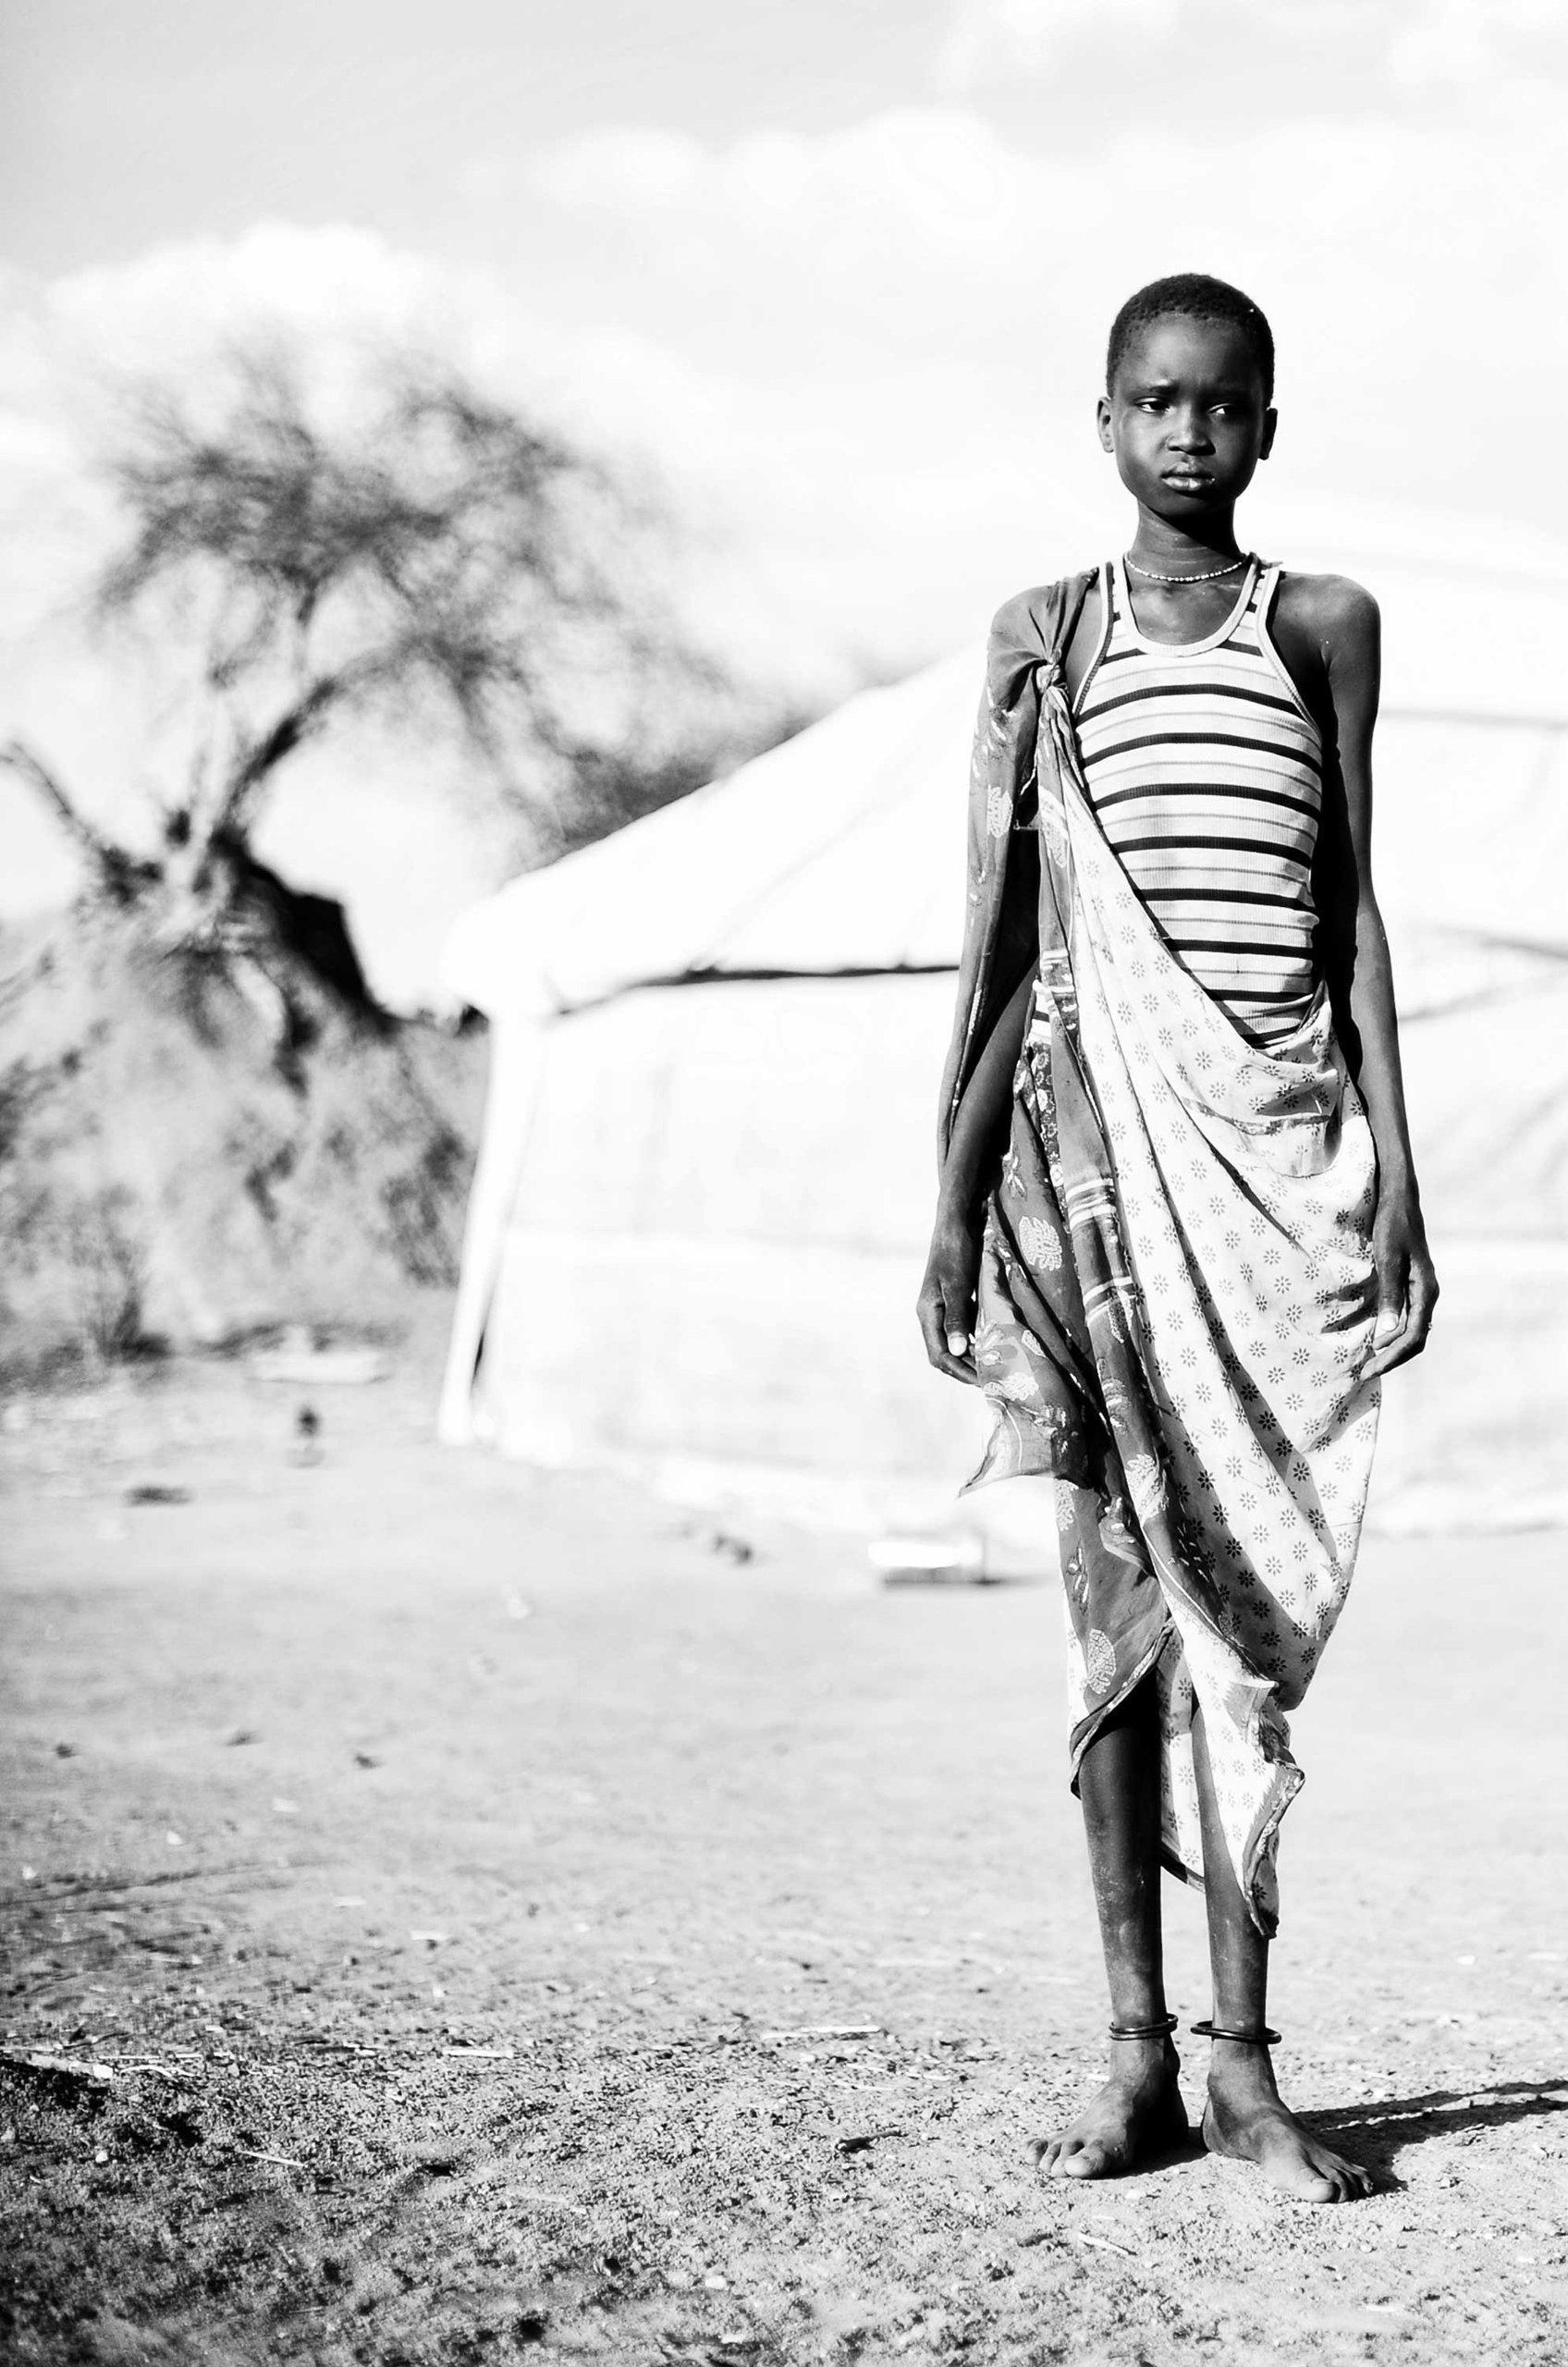 ugo-borga-south-soudan-portraits-2016-black-and-white-03